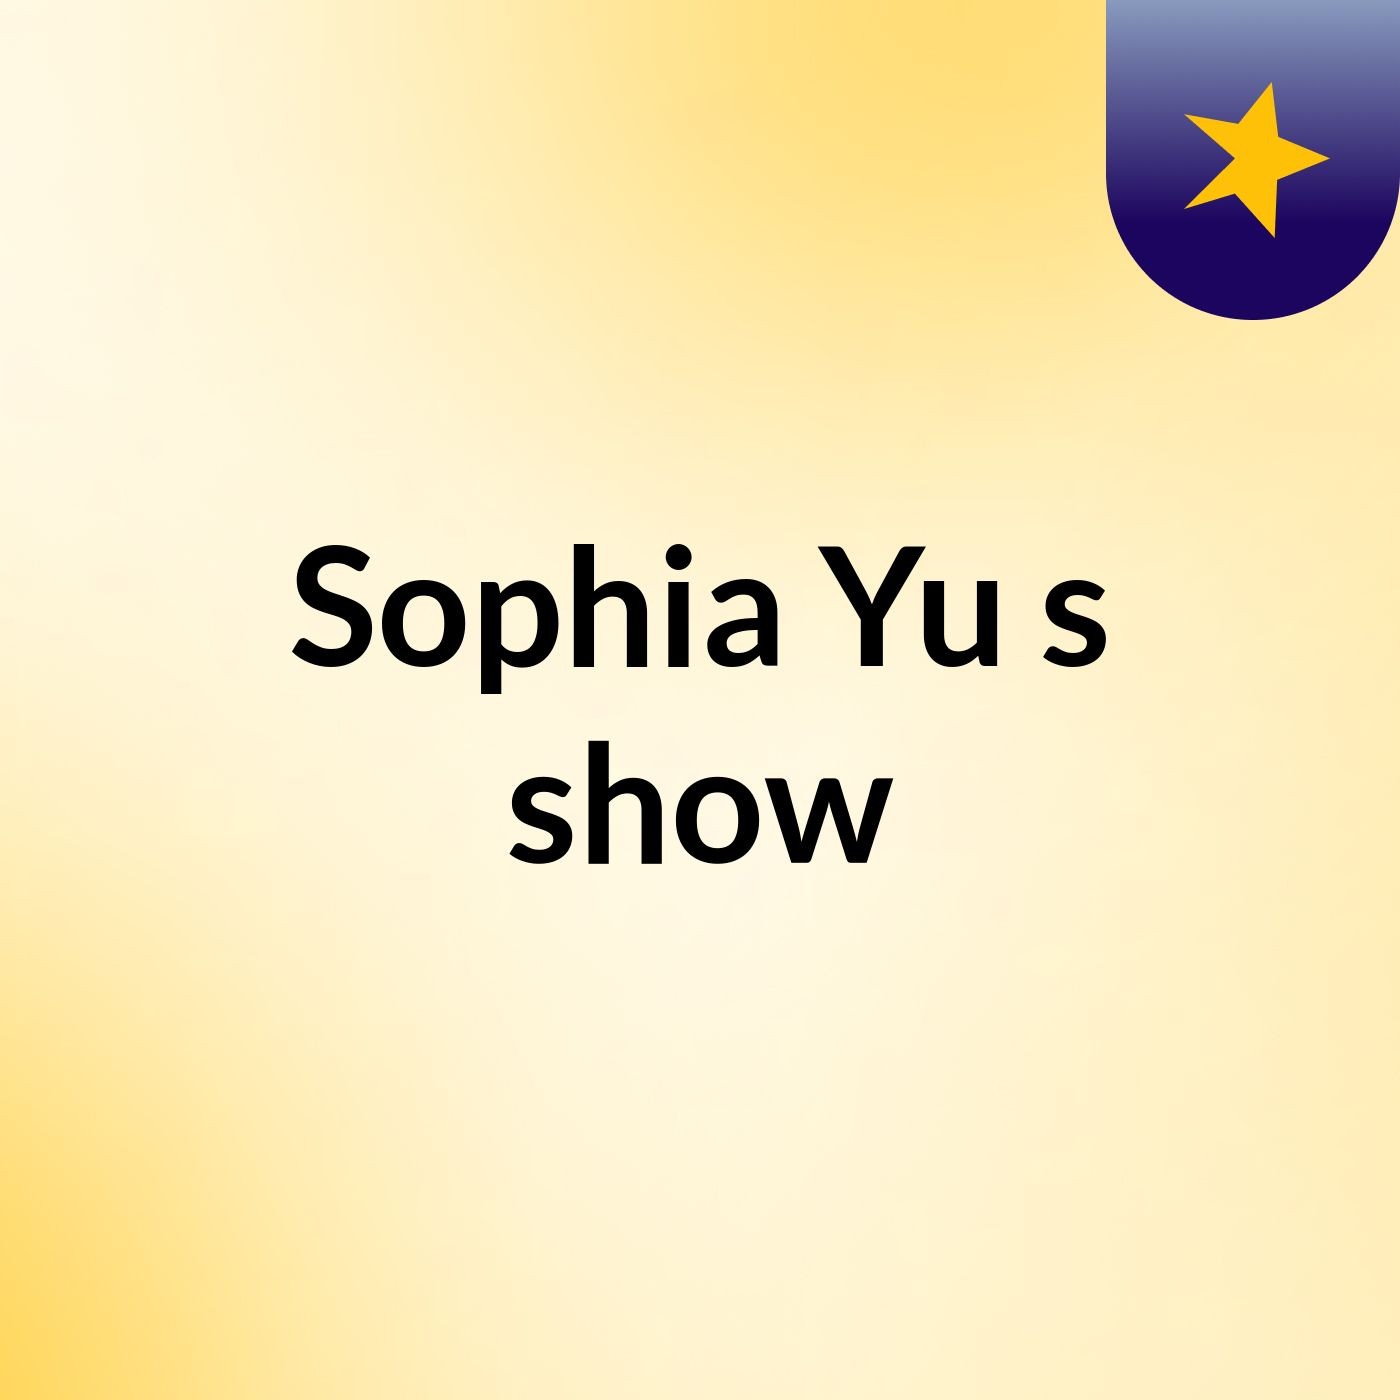 Sophia Yu's show